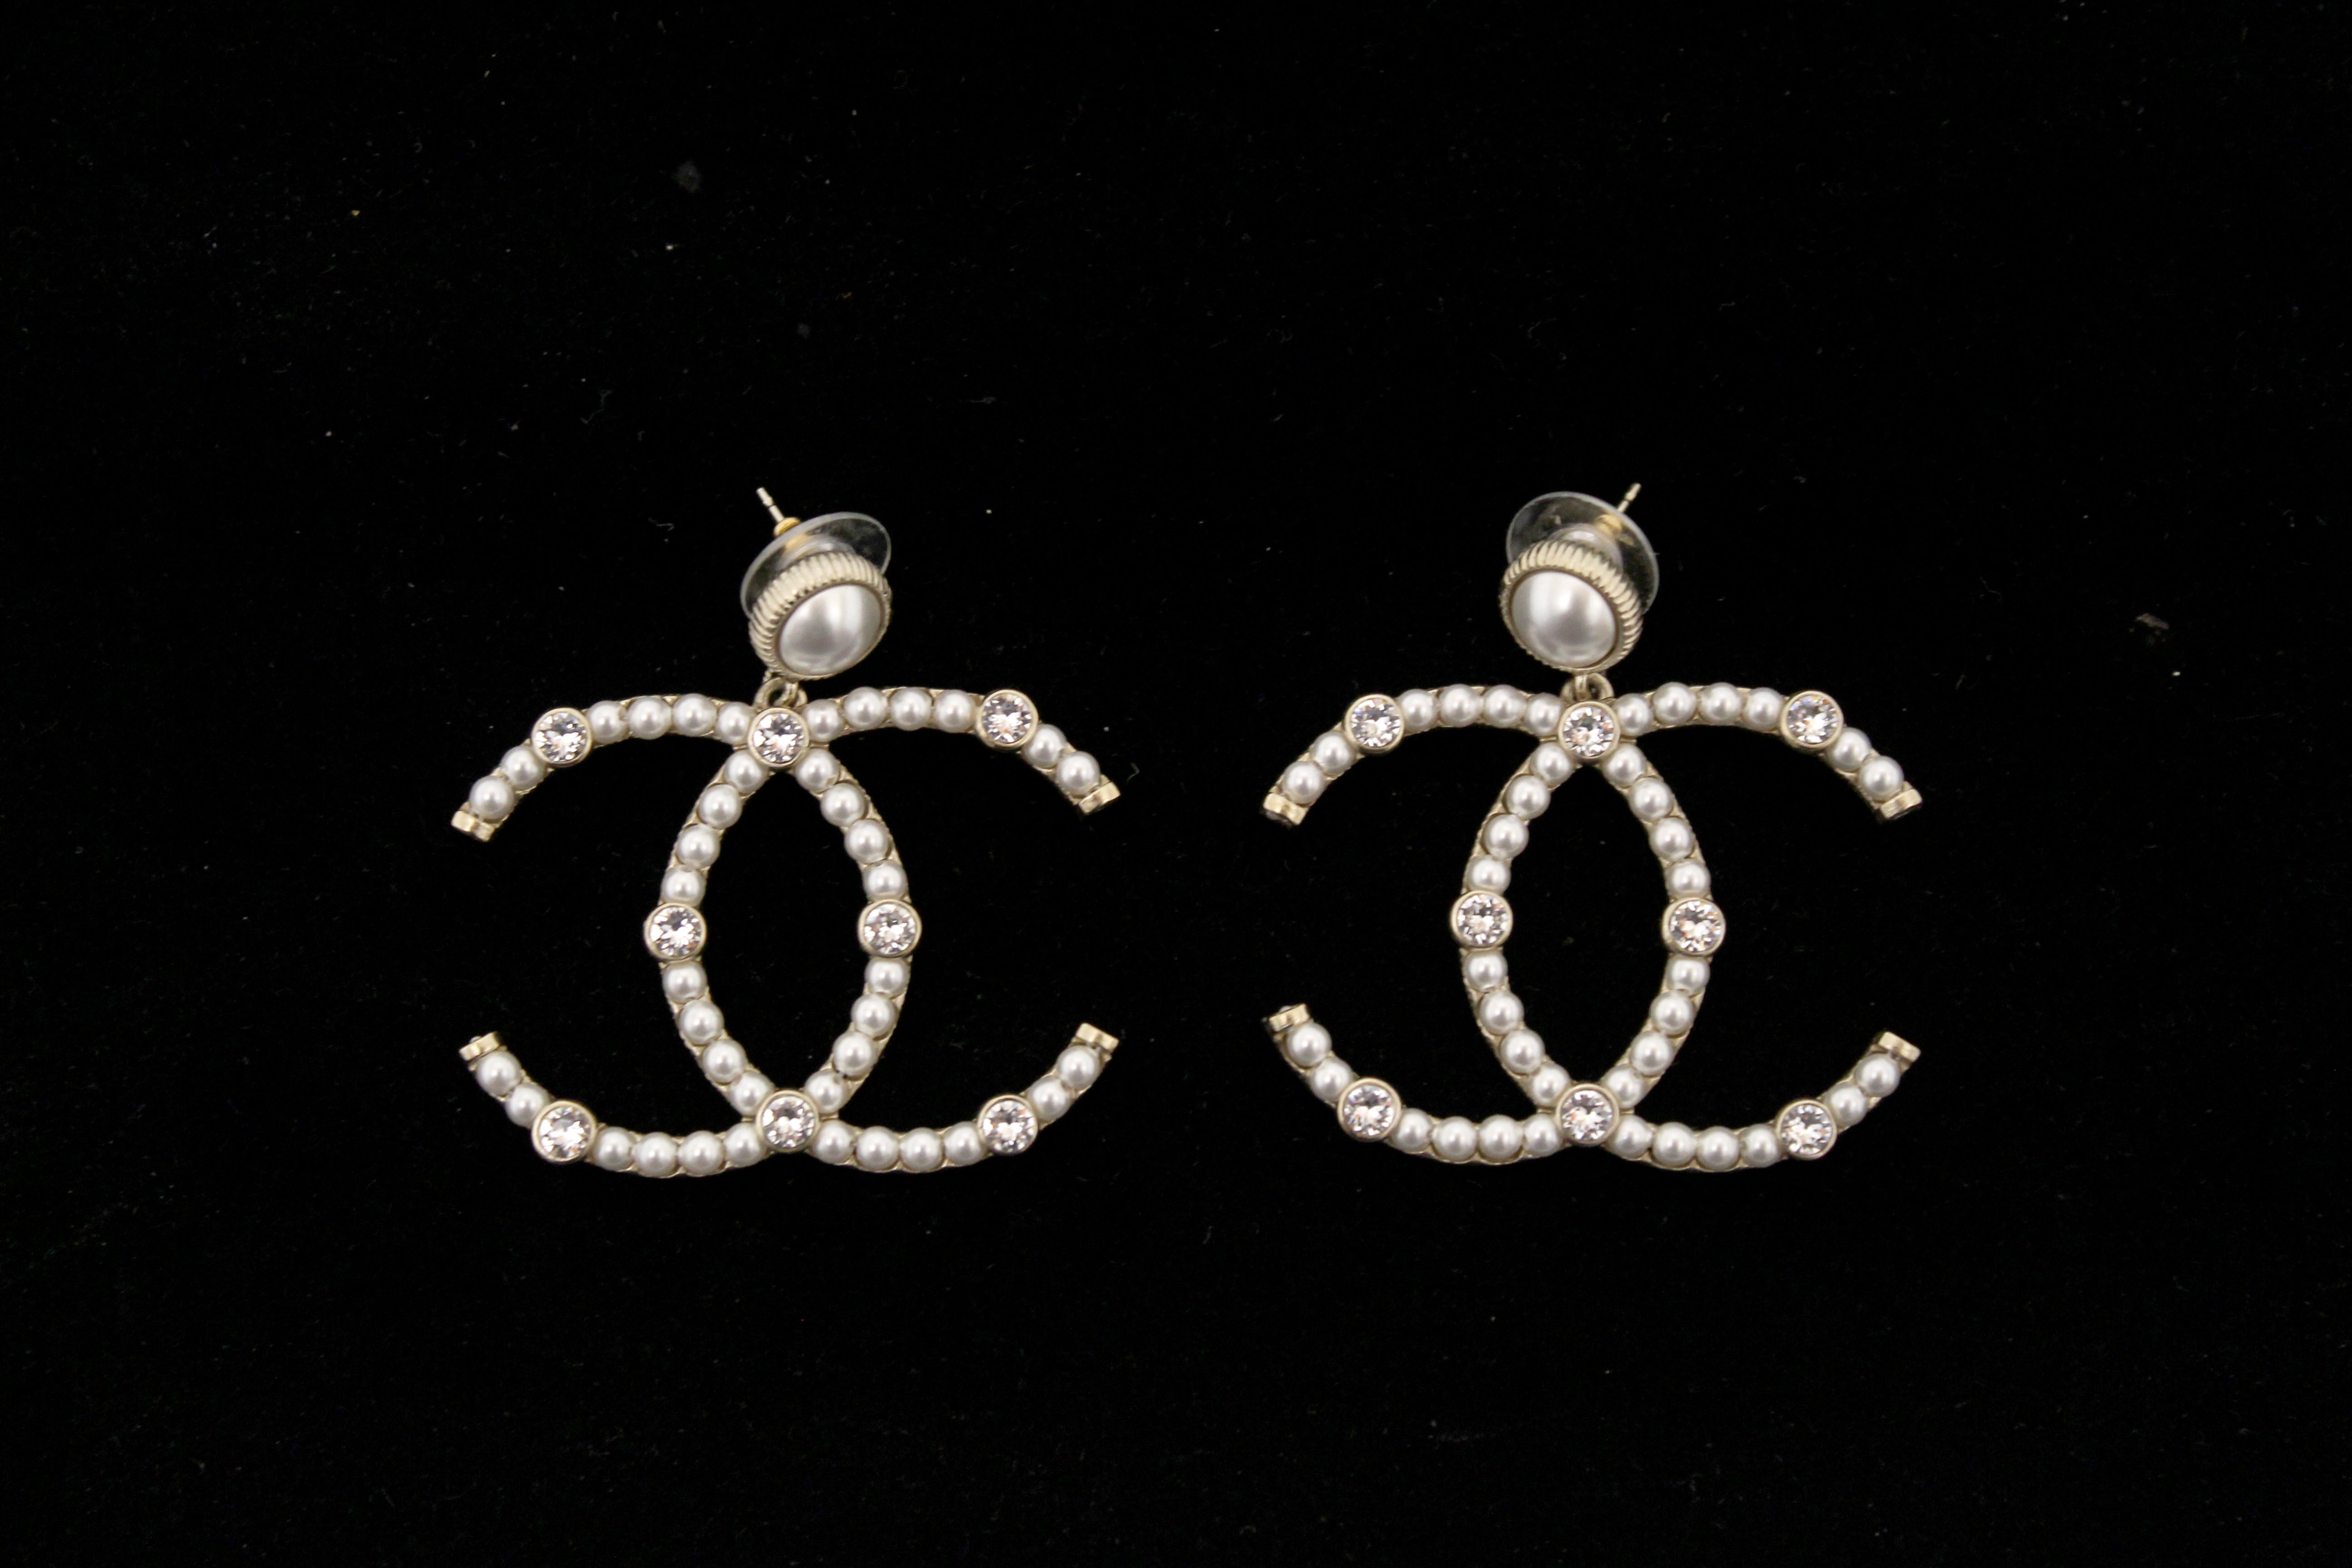 Classic chanel earrings or - Gem